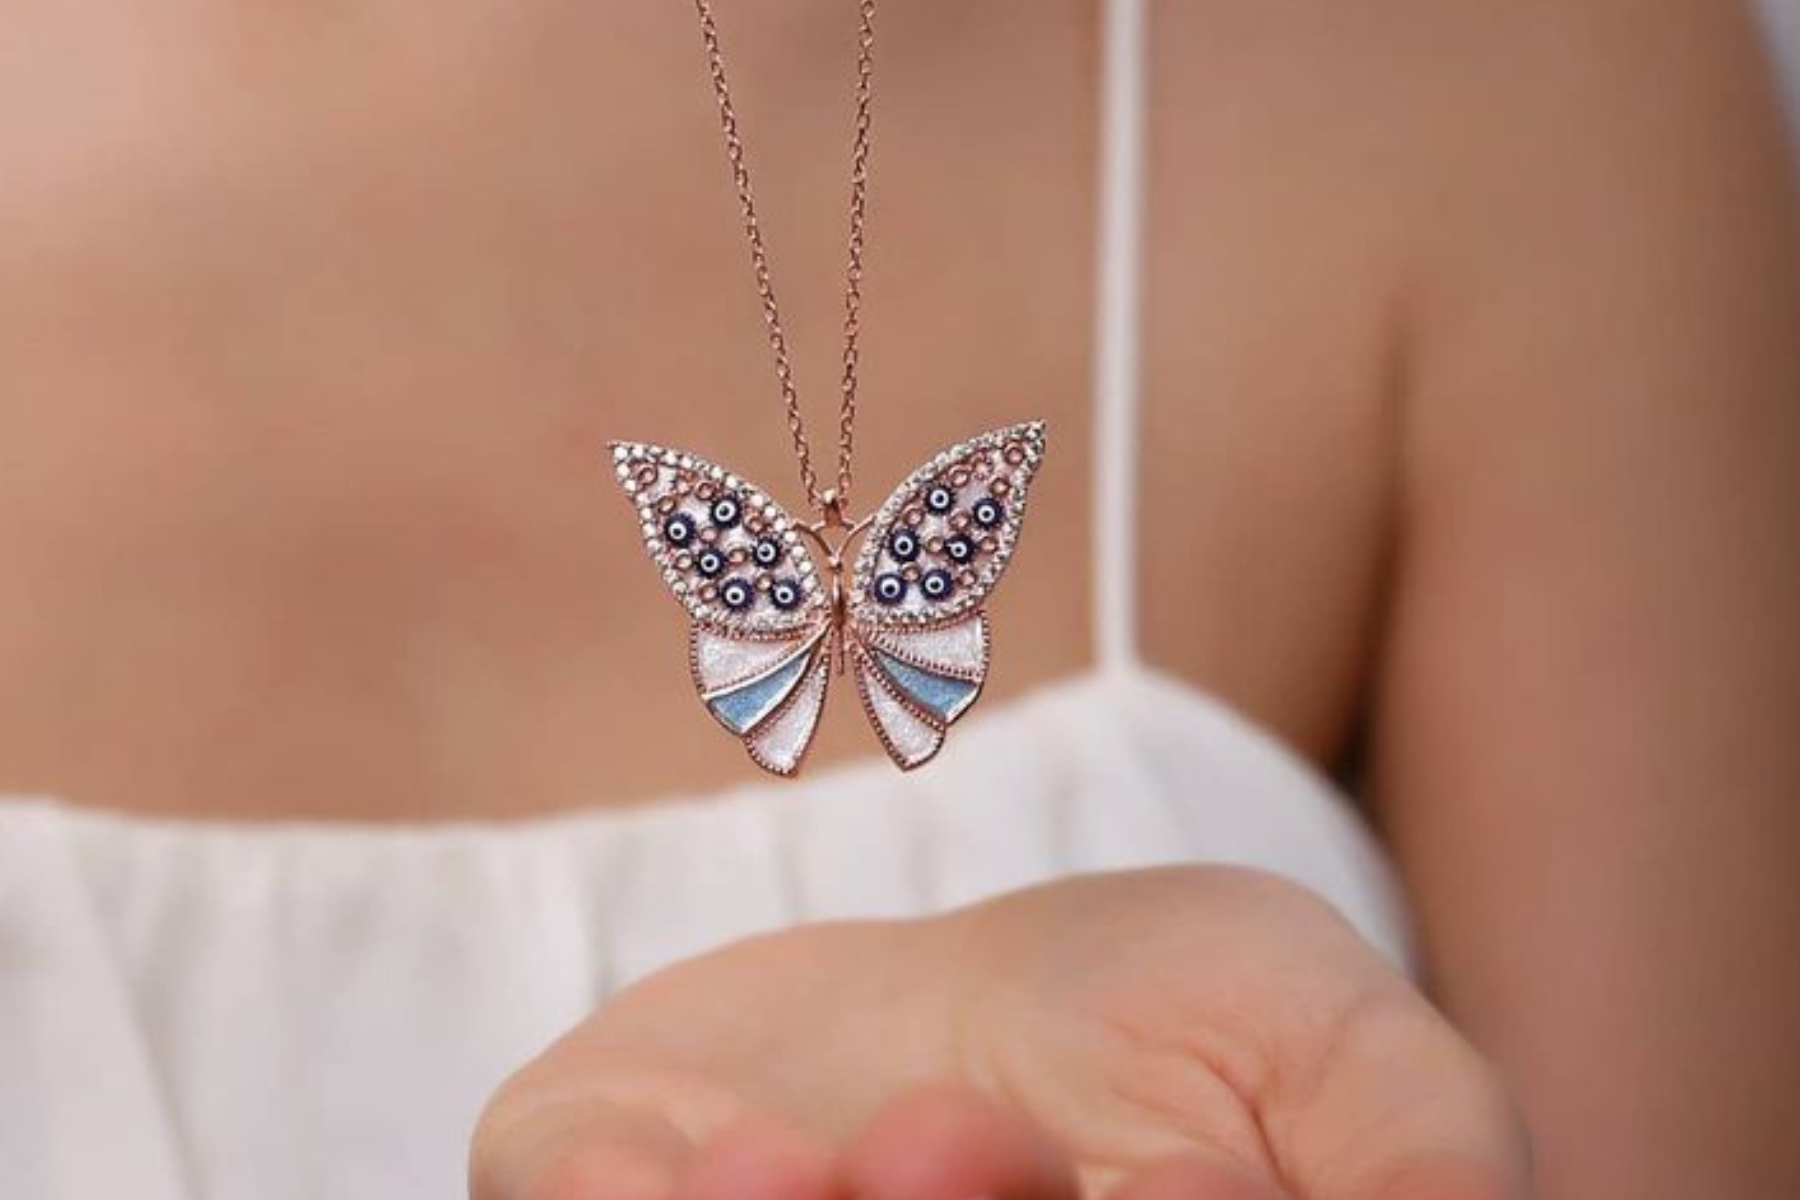 A lady holding a butterfly necklace